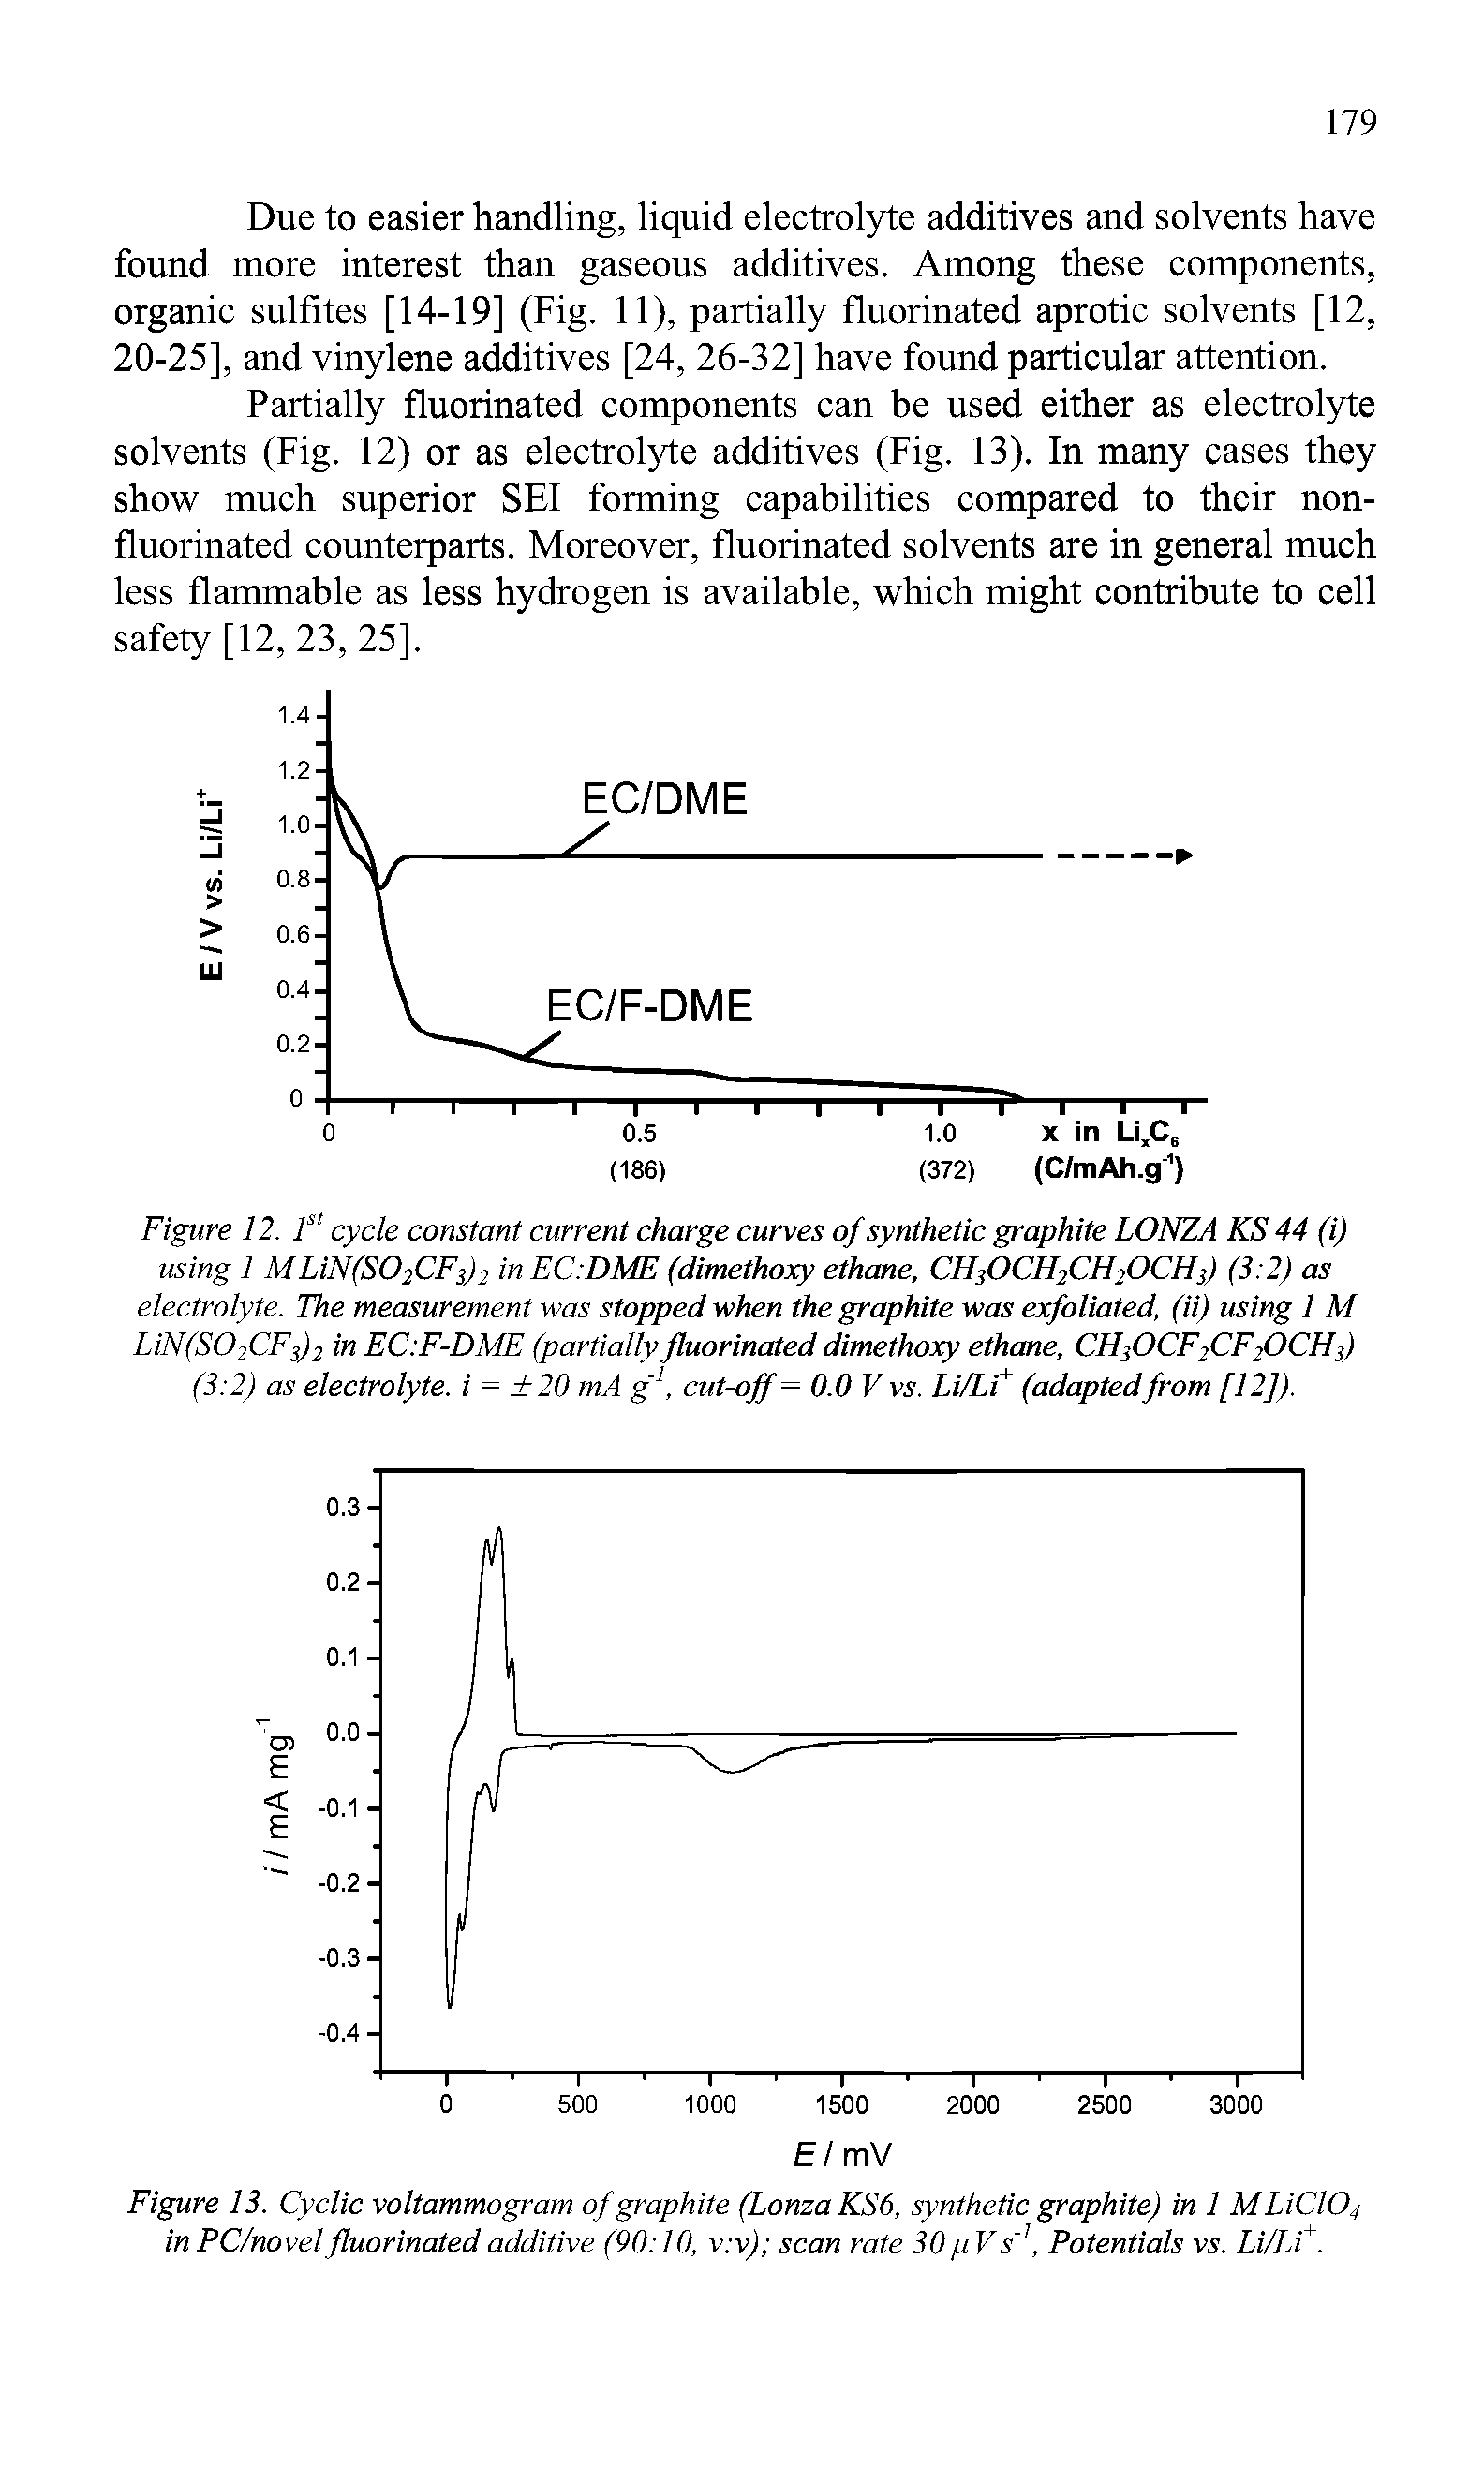 Figure 13. Cyclic voltammogram of graphite (Lonza KS6, synthetic graphite) in 1 MLiCl04 in PC/novel fluorinated additive (90 10, v v) scan rate 30 pV s 1, Potentials vs. Li/Li+.